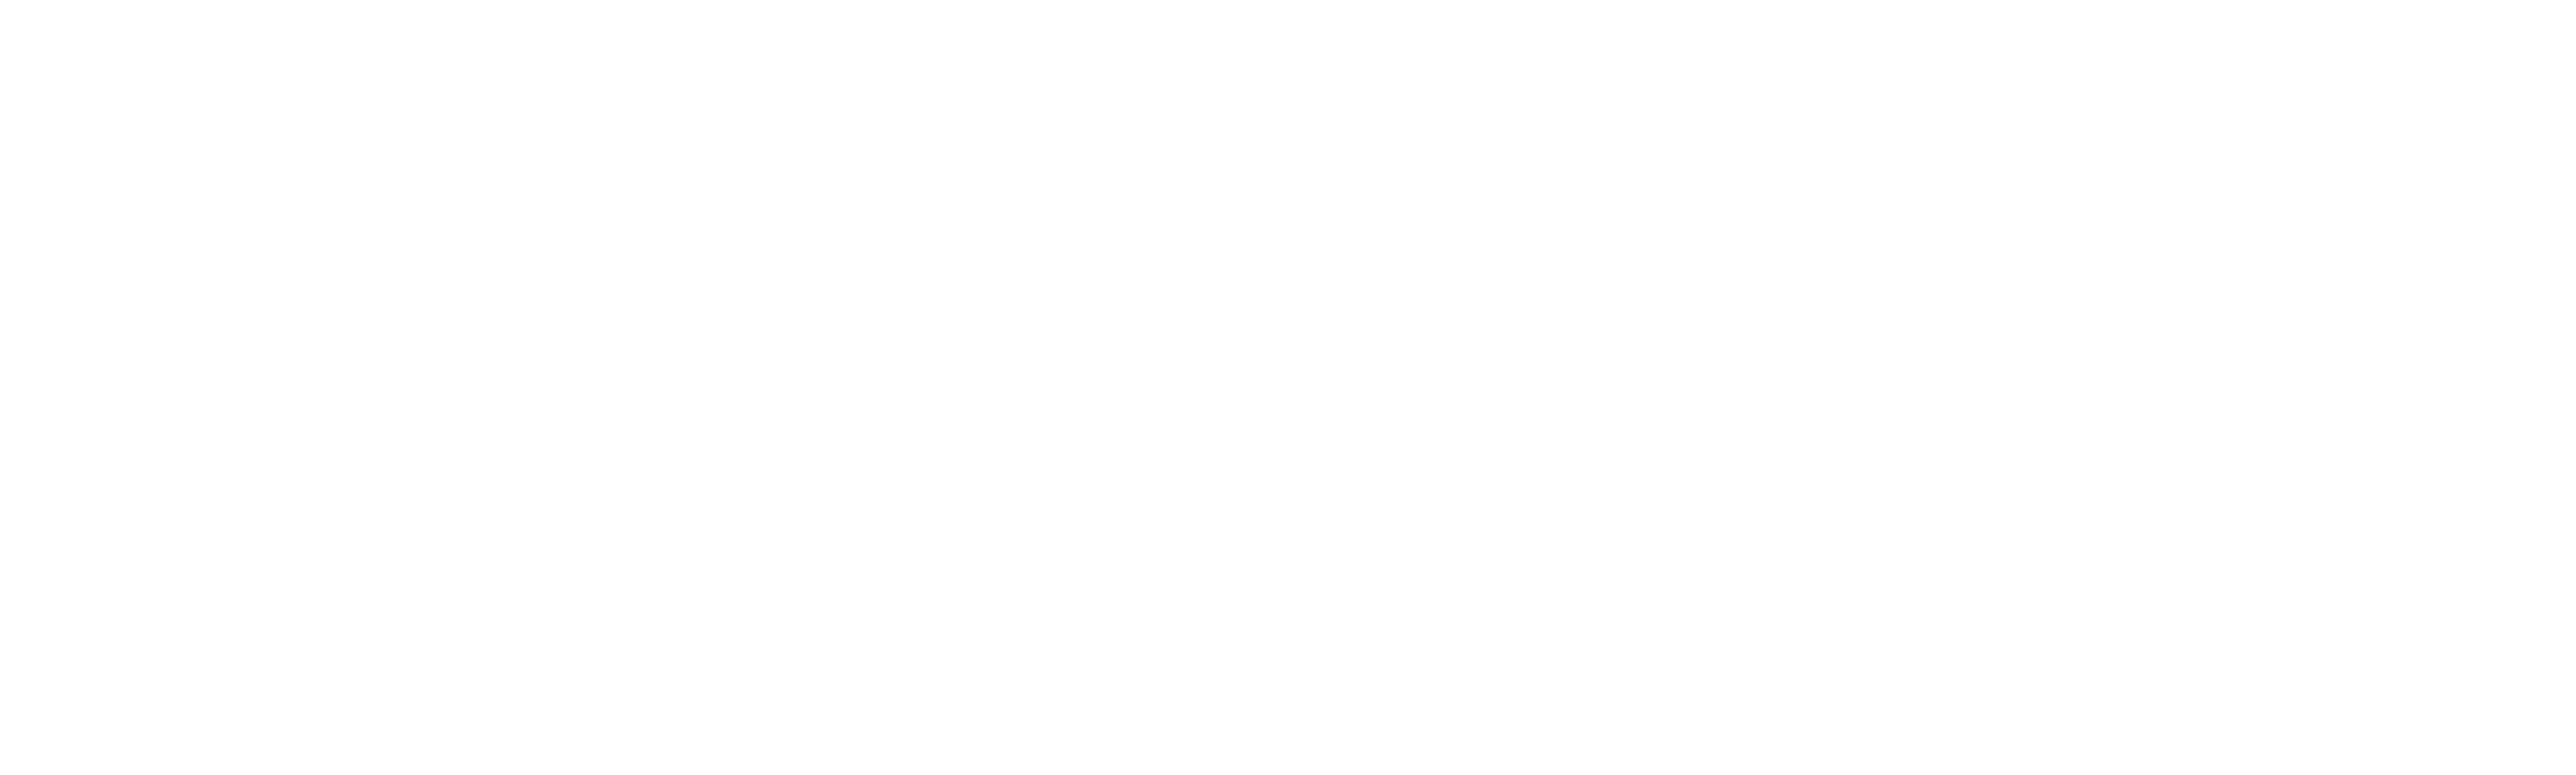 Steven Universe Future, Watch Free Episodes